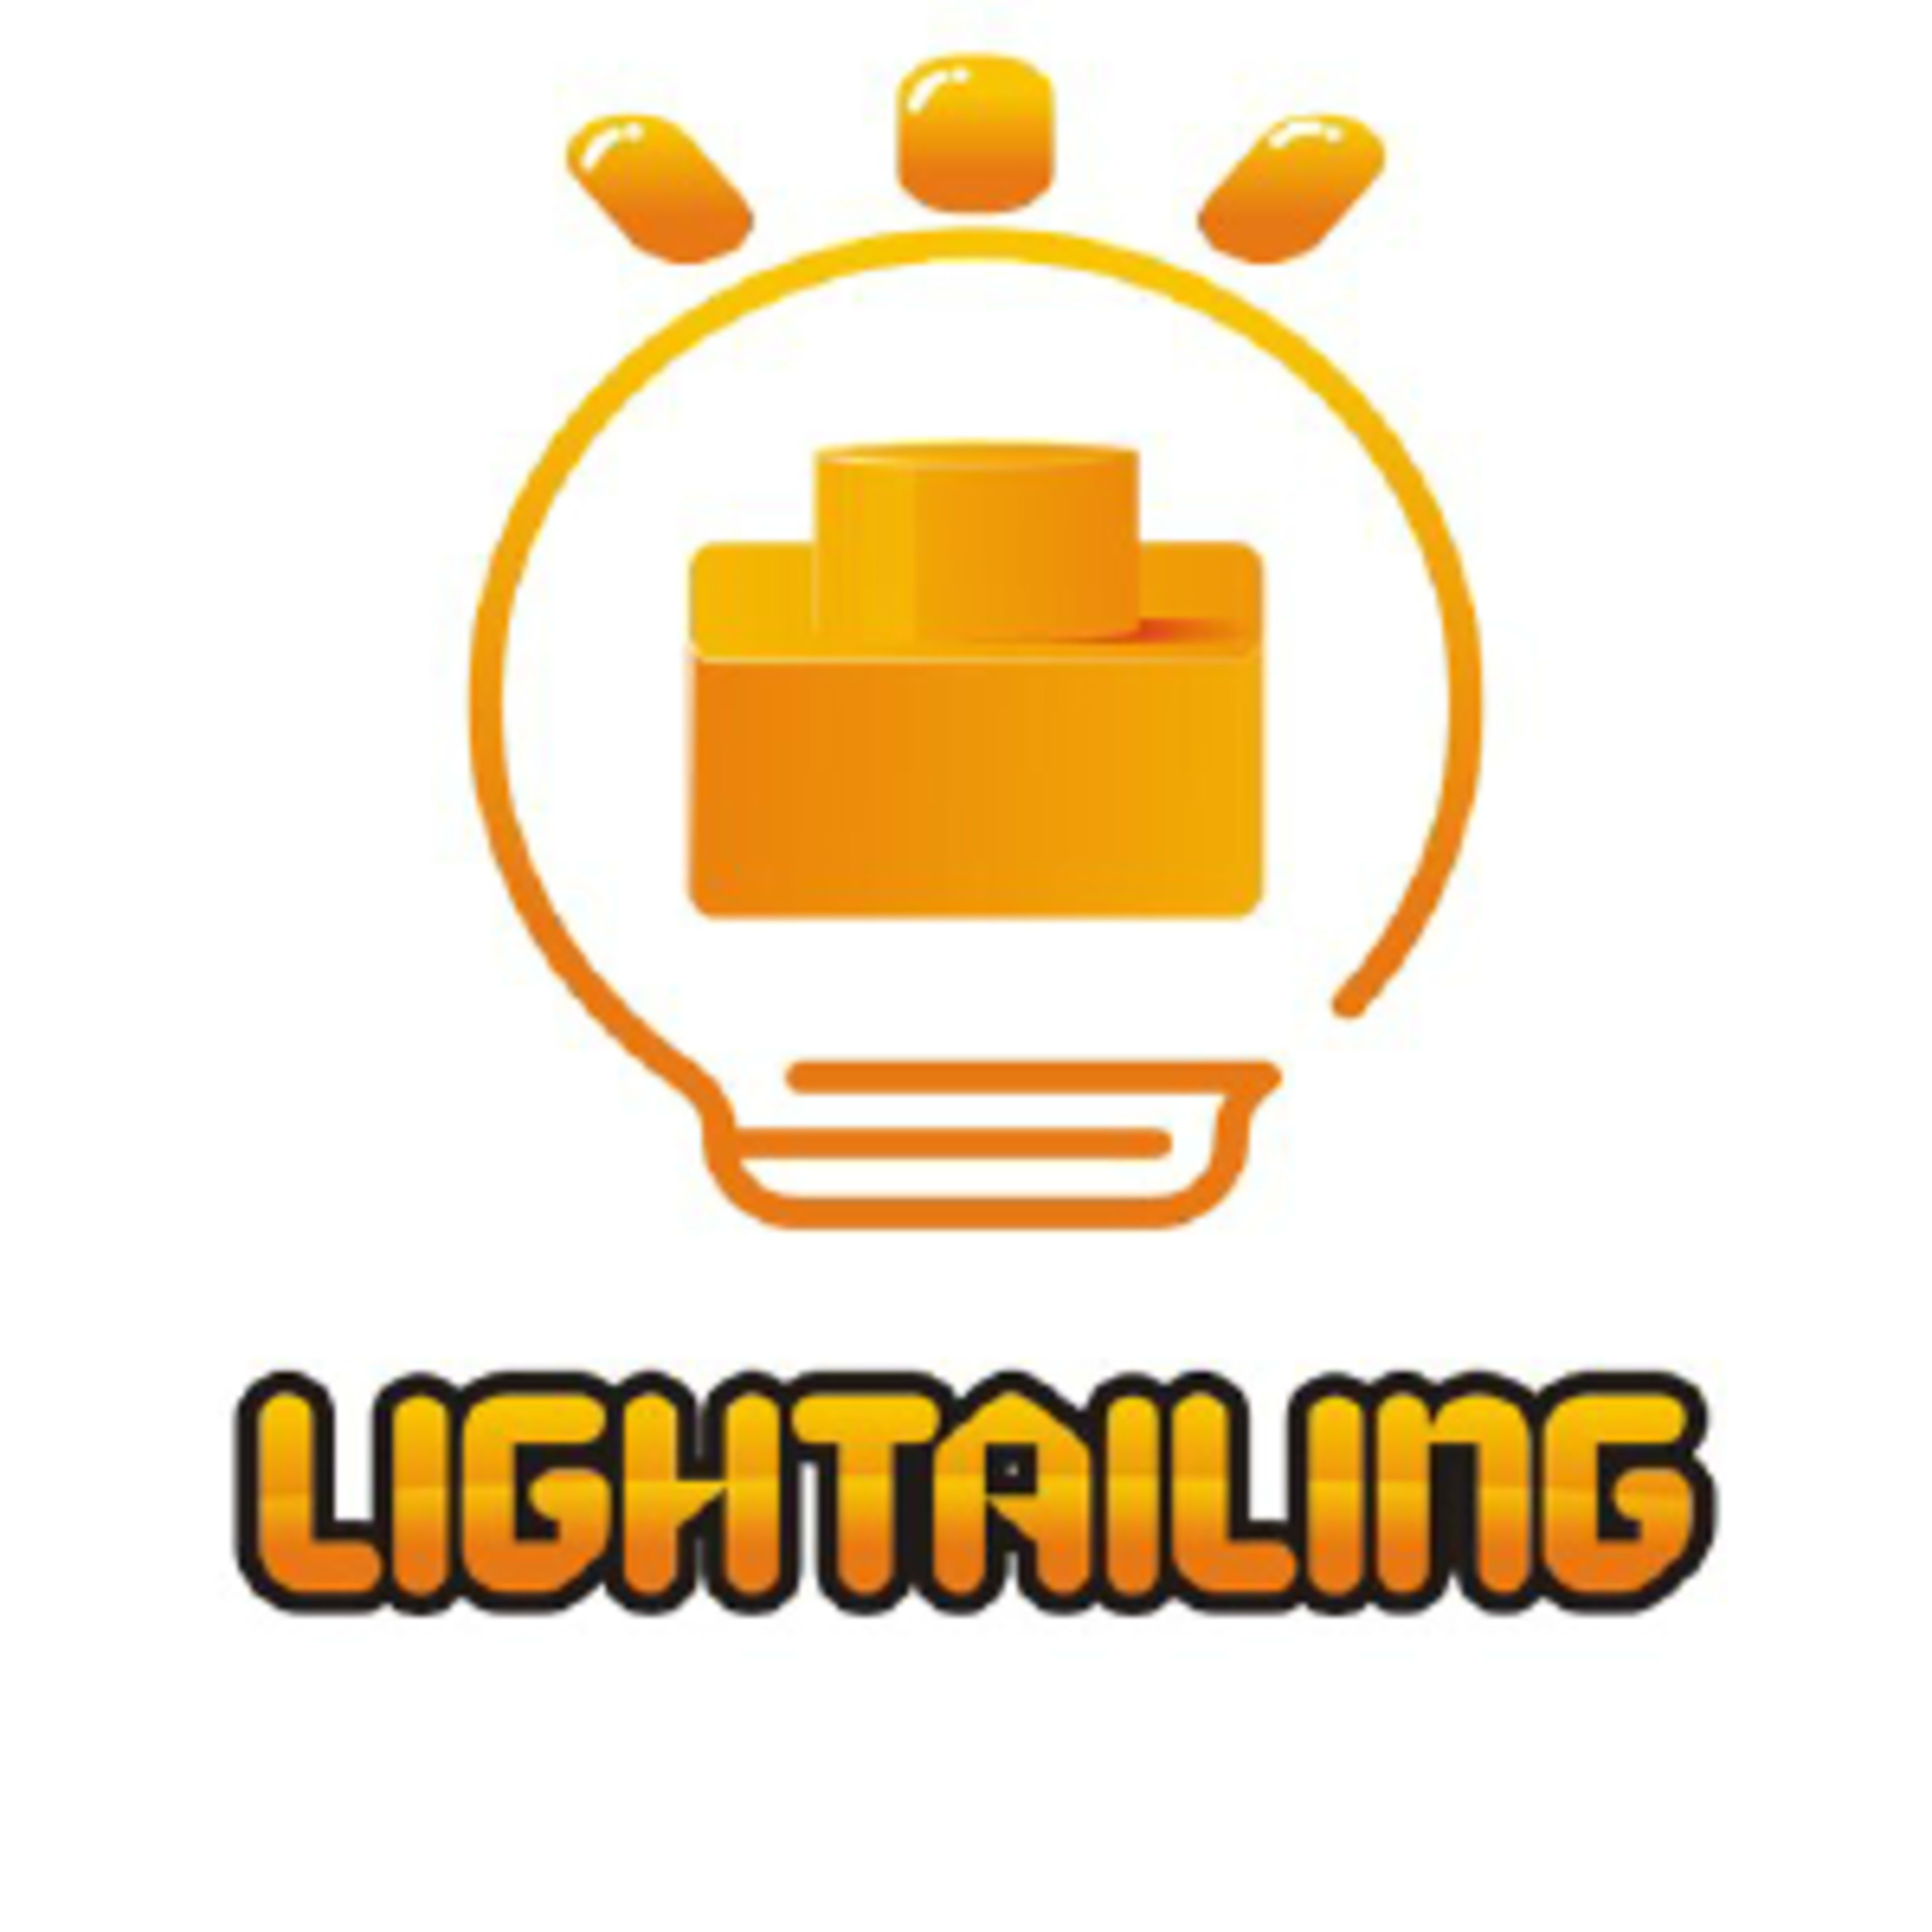 Lightailing Code